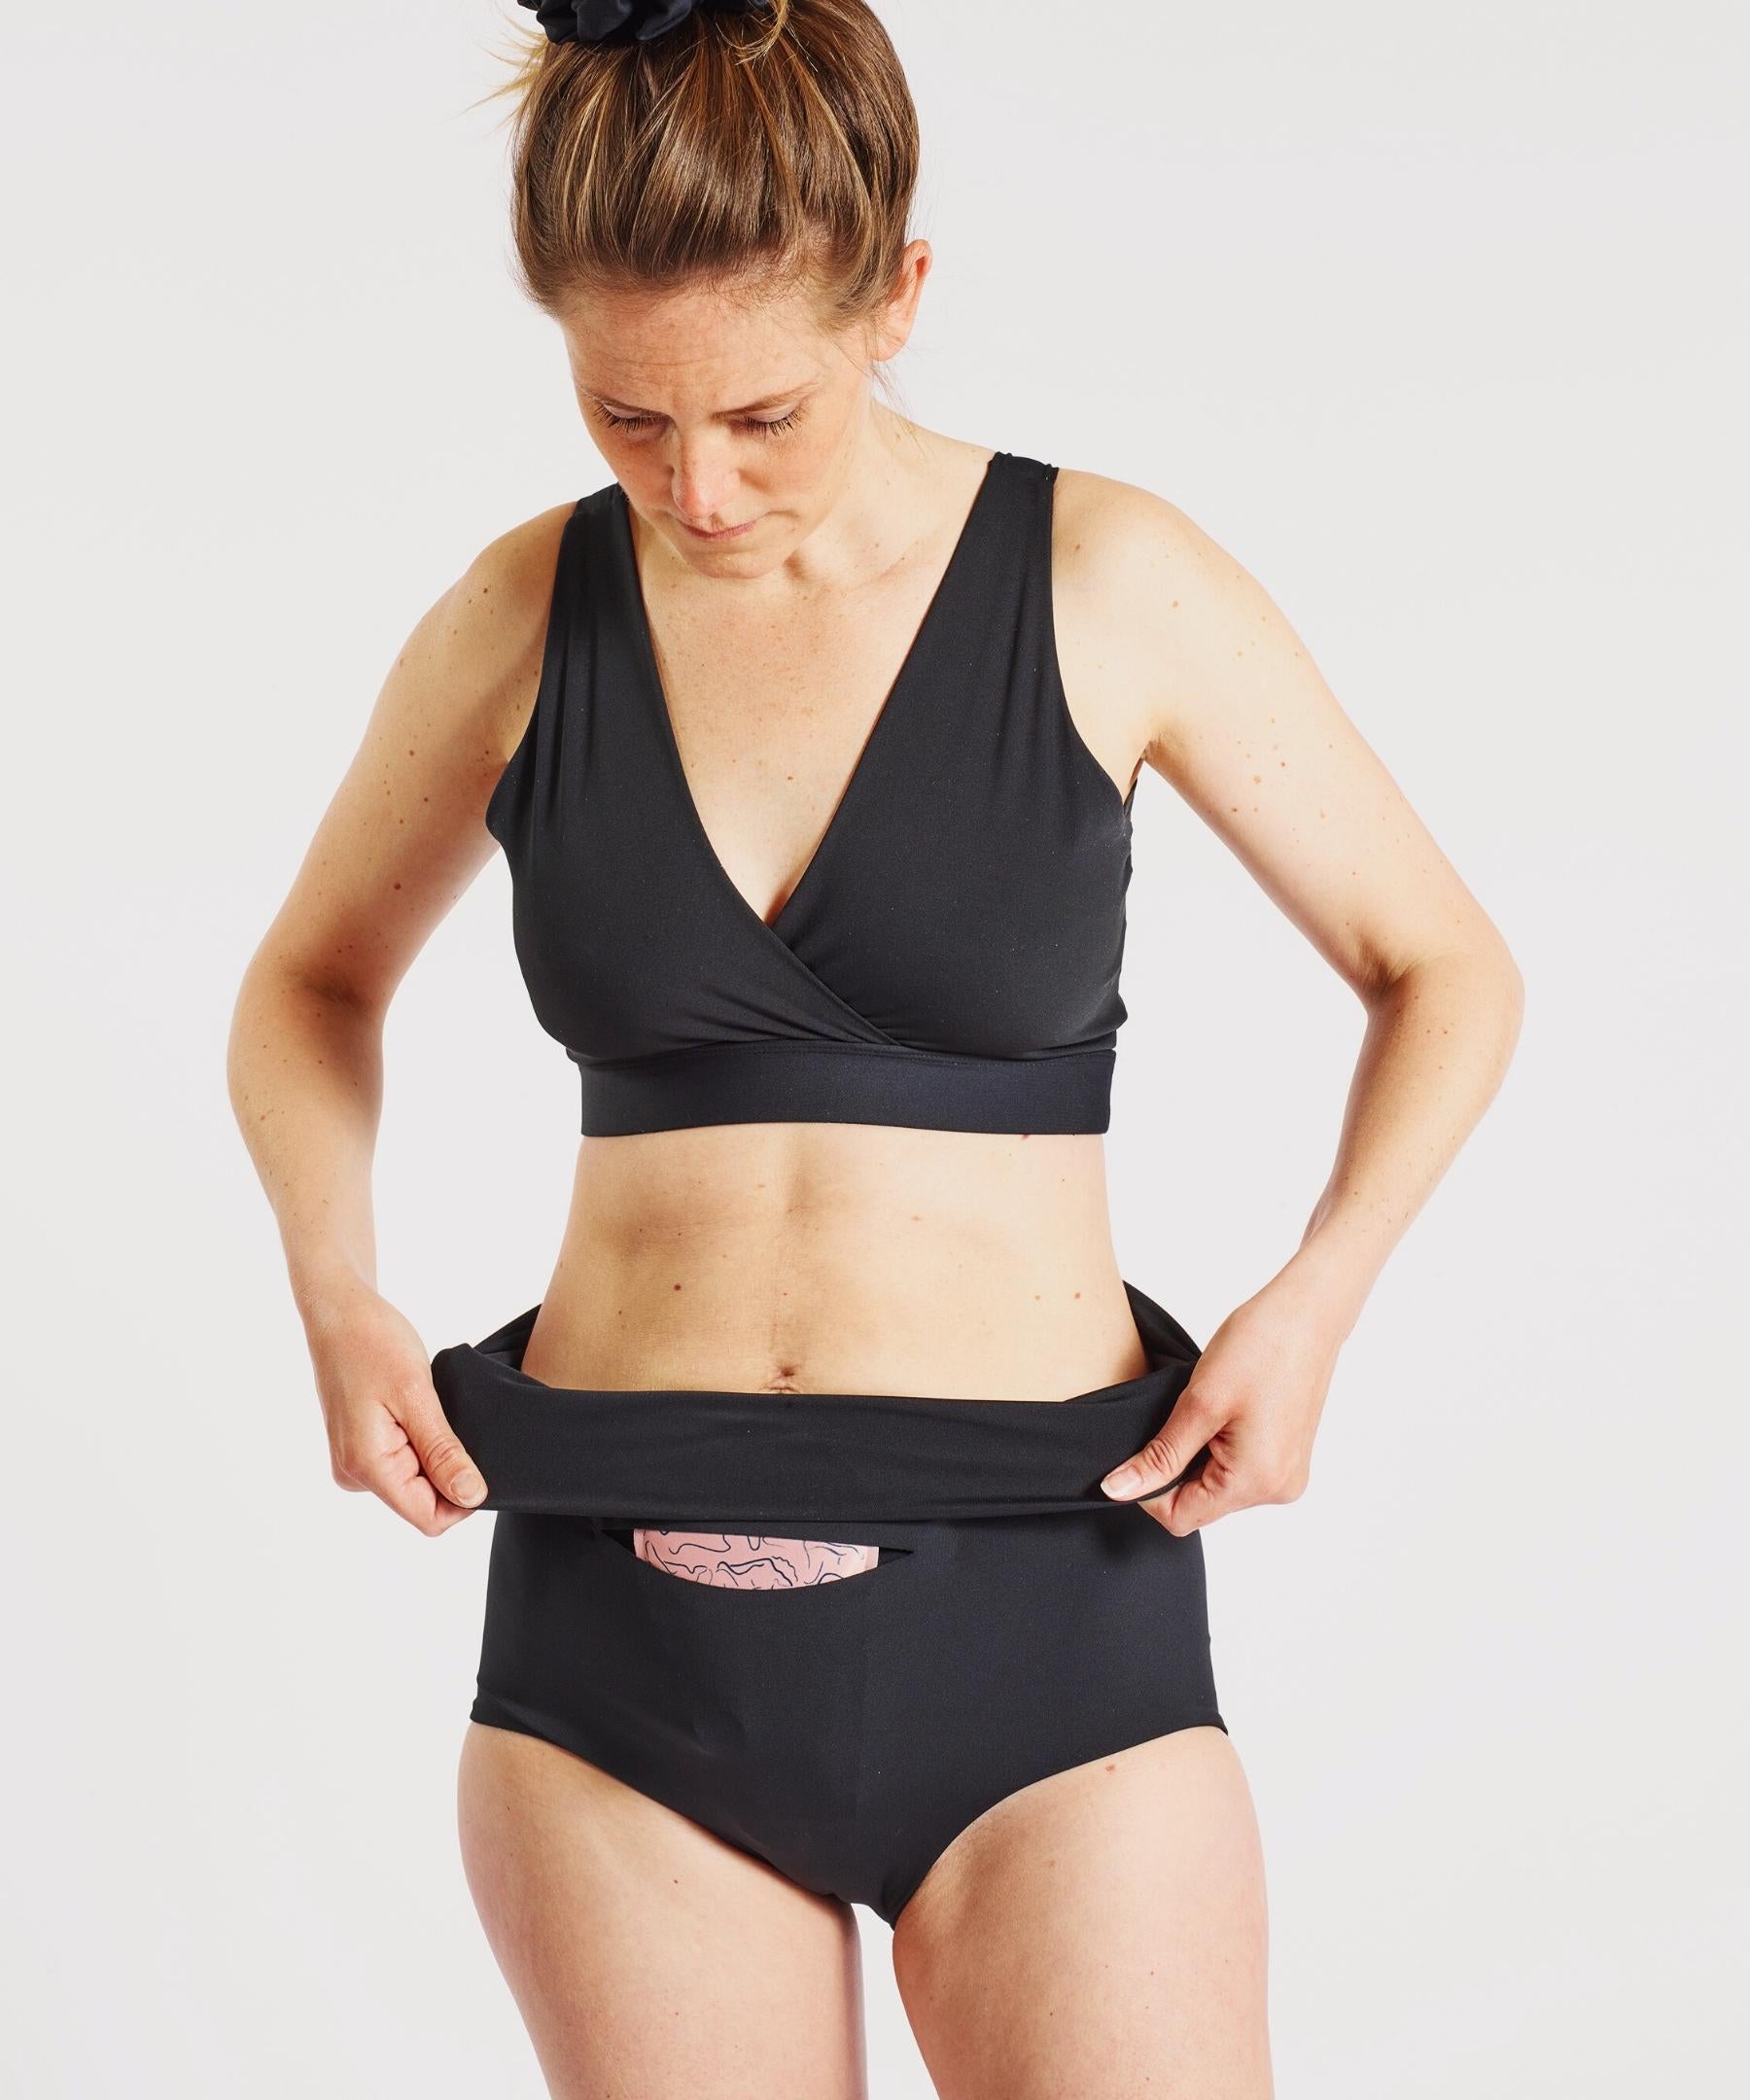 Postpartum Underwear From Apele Offers the Best Pelvic Support